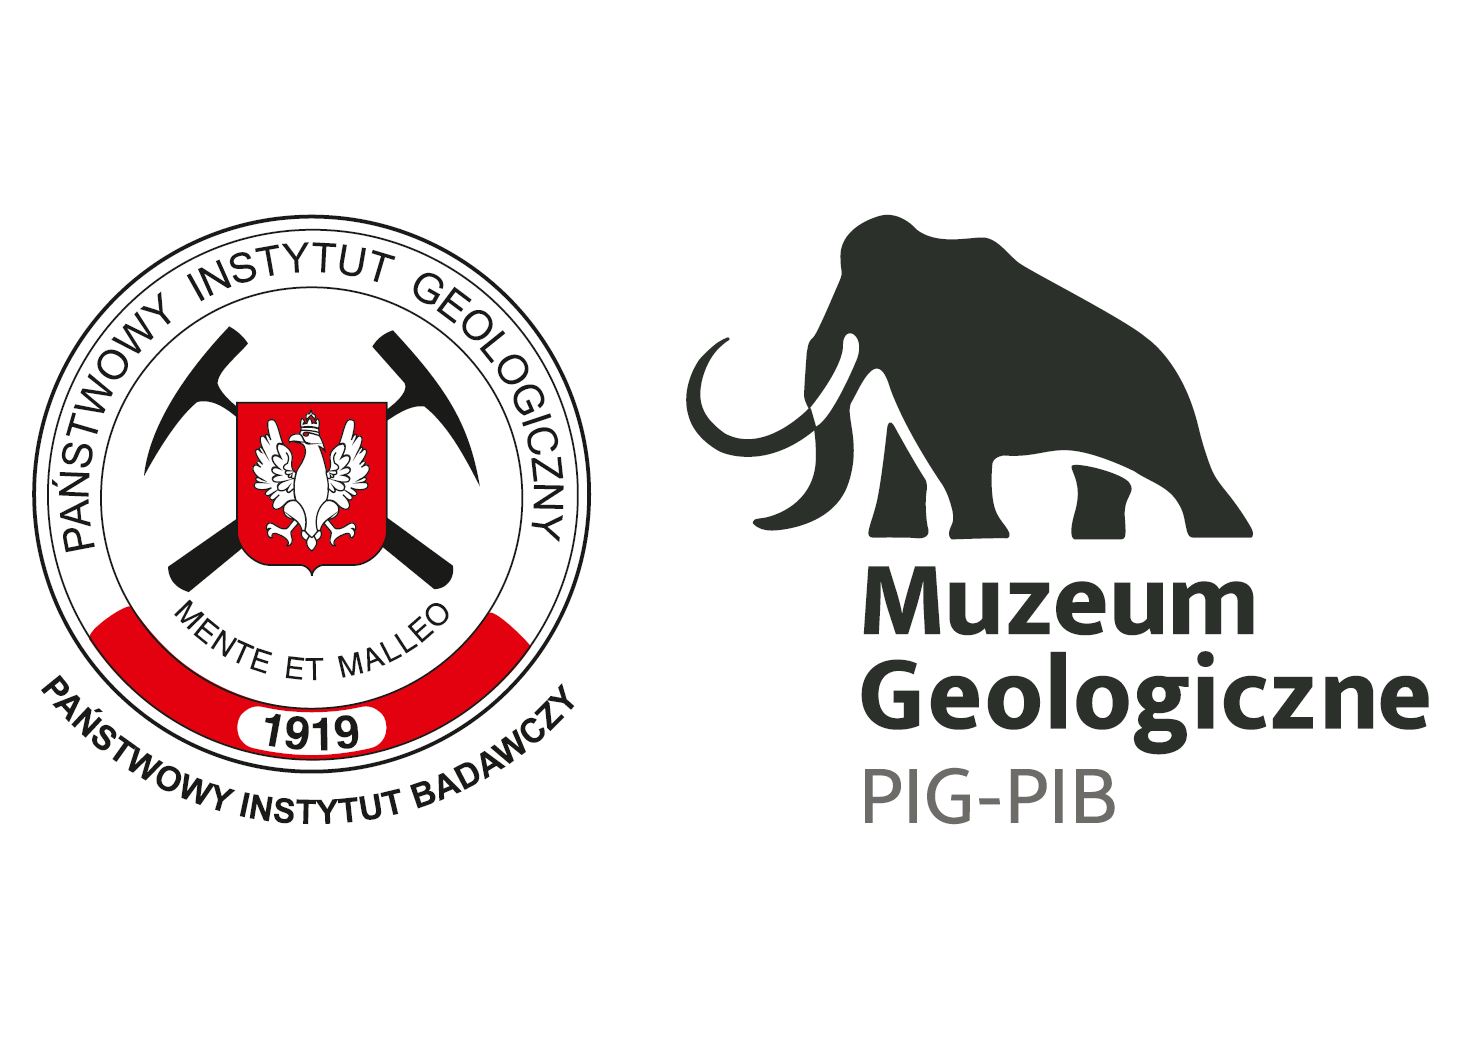 Giełda Minerałów i Biżuterii Warsaw Mineral Expo